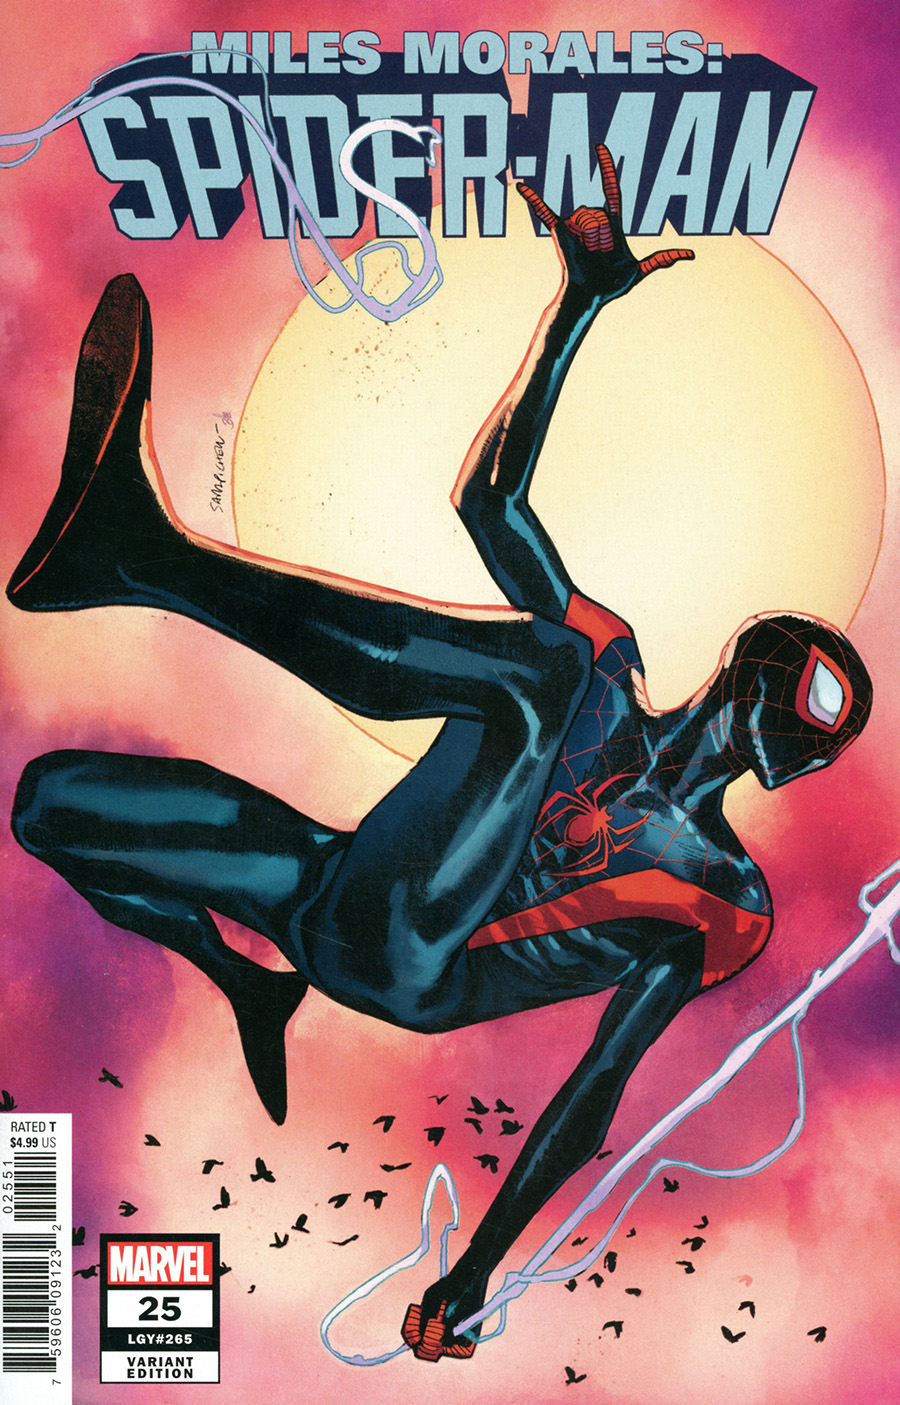 Miles Morales Spider-Man #25 Cover F Incentive Sara Pichelli Variant Cover